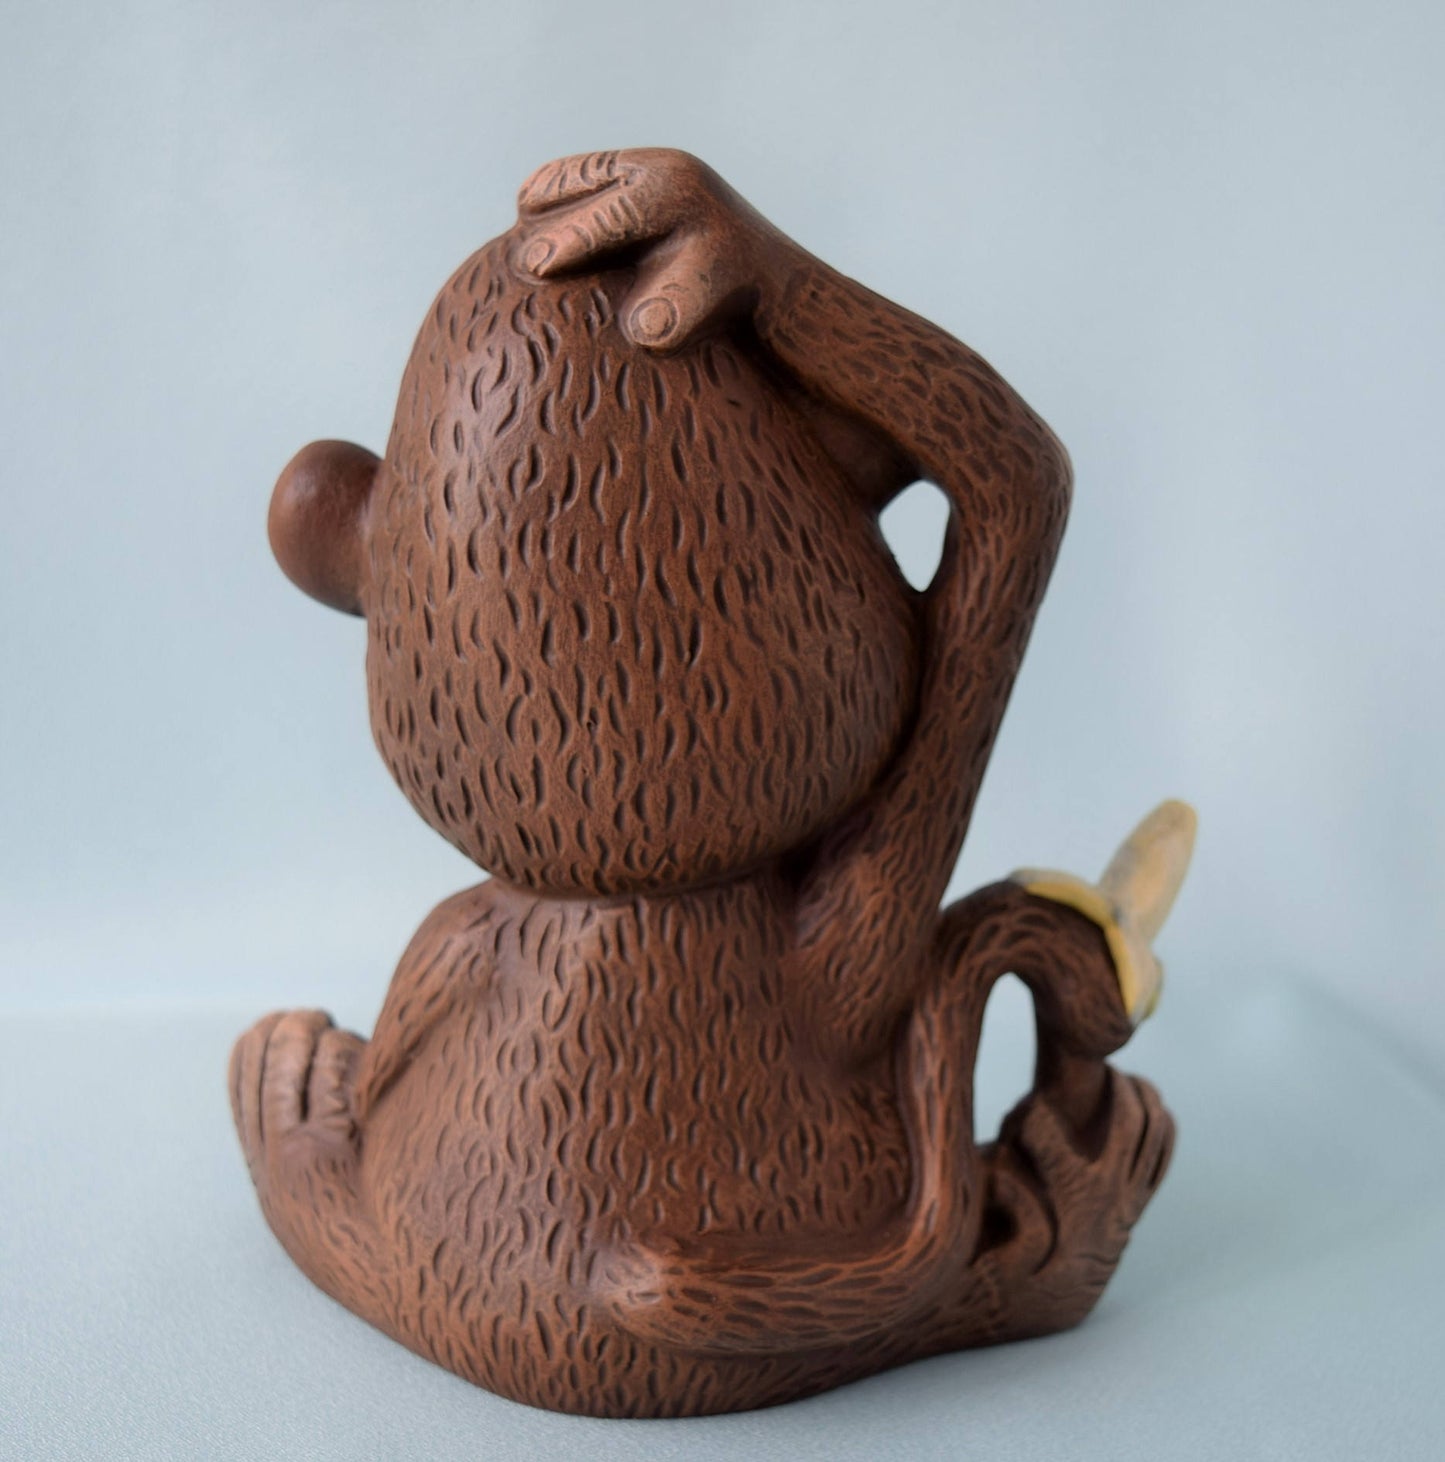 Monkey - Figurine - Ceramic - Nursery Decor - Ape - Chimpanzee - Jungle - baby Shower - Birthday - Collectible - Gift for Kids - Safari